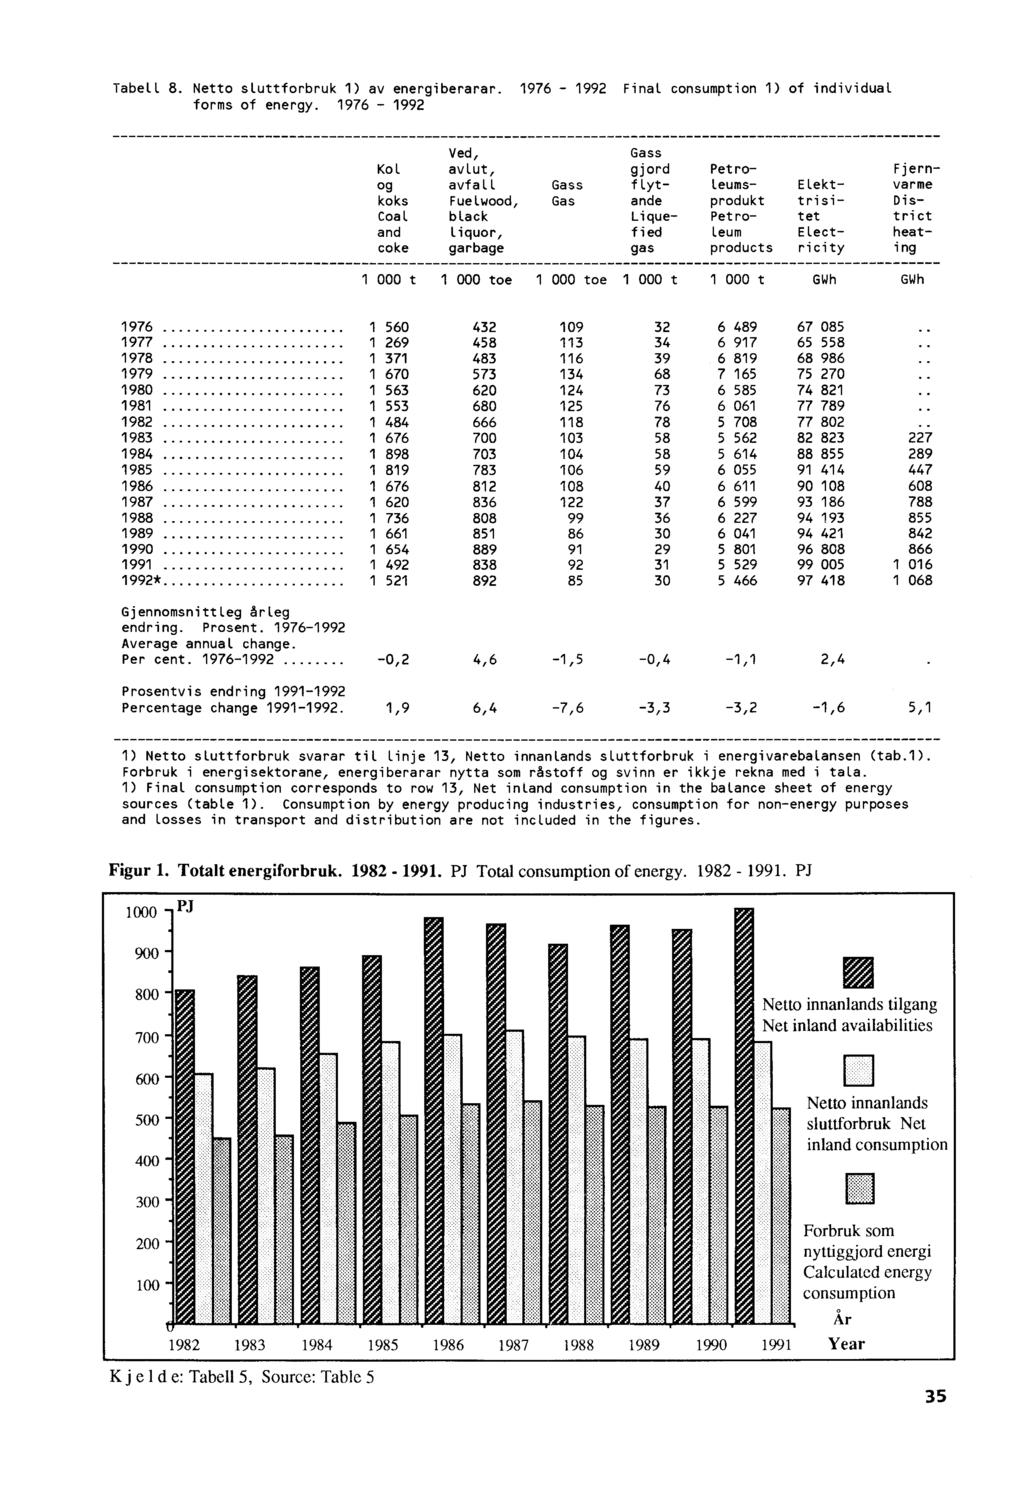 Tabell 8. Netto sluttforbruk 1) av energiberarar. 1976-1992 Final consumption 1) of individual forms of energy.